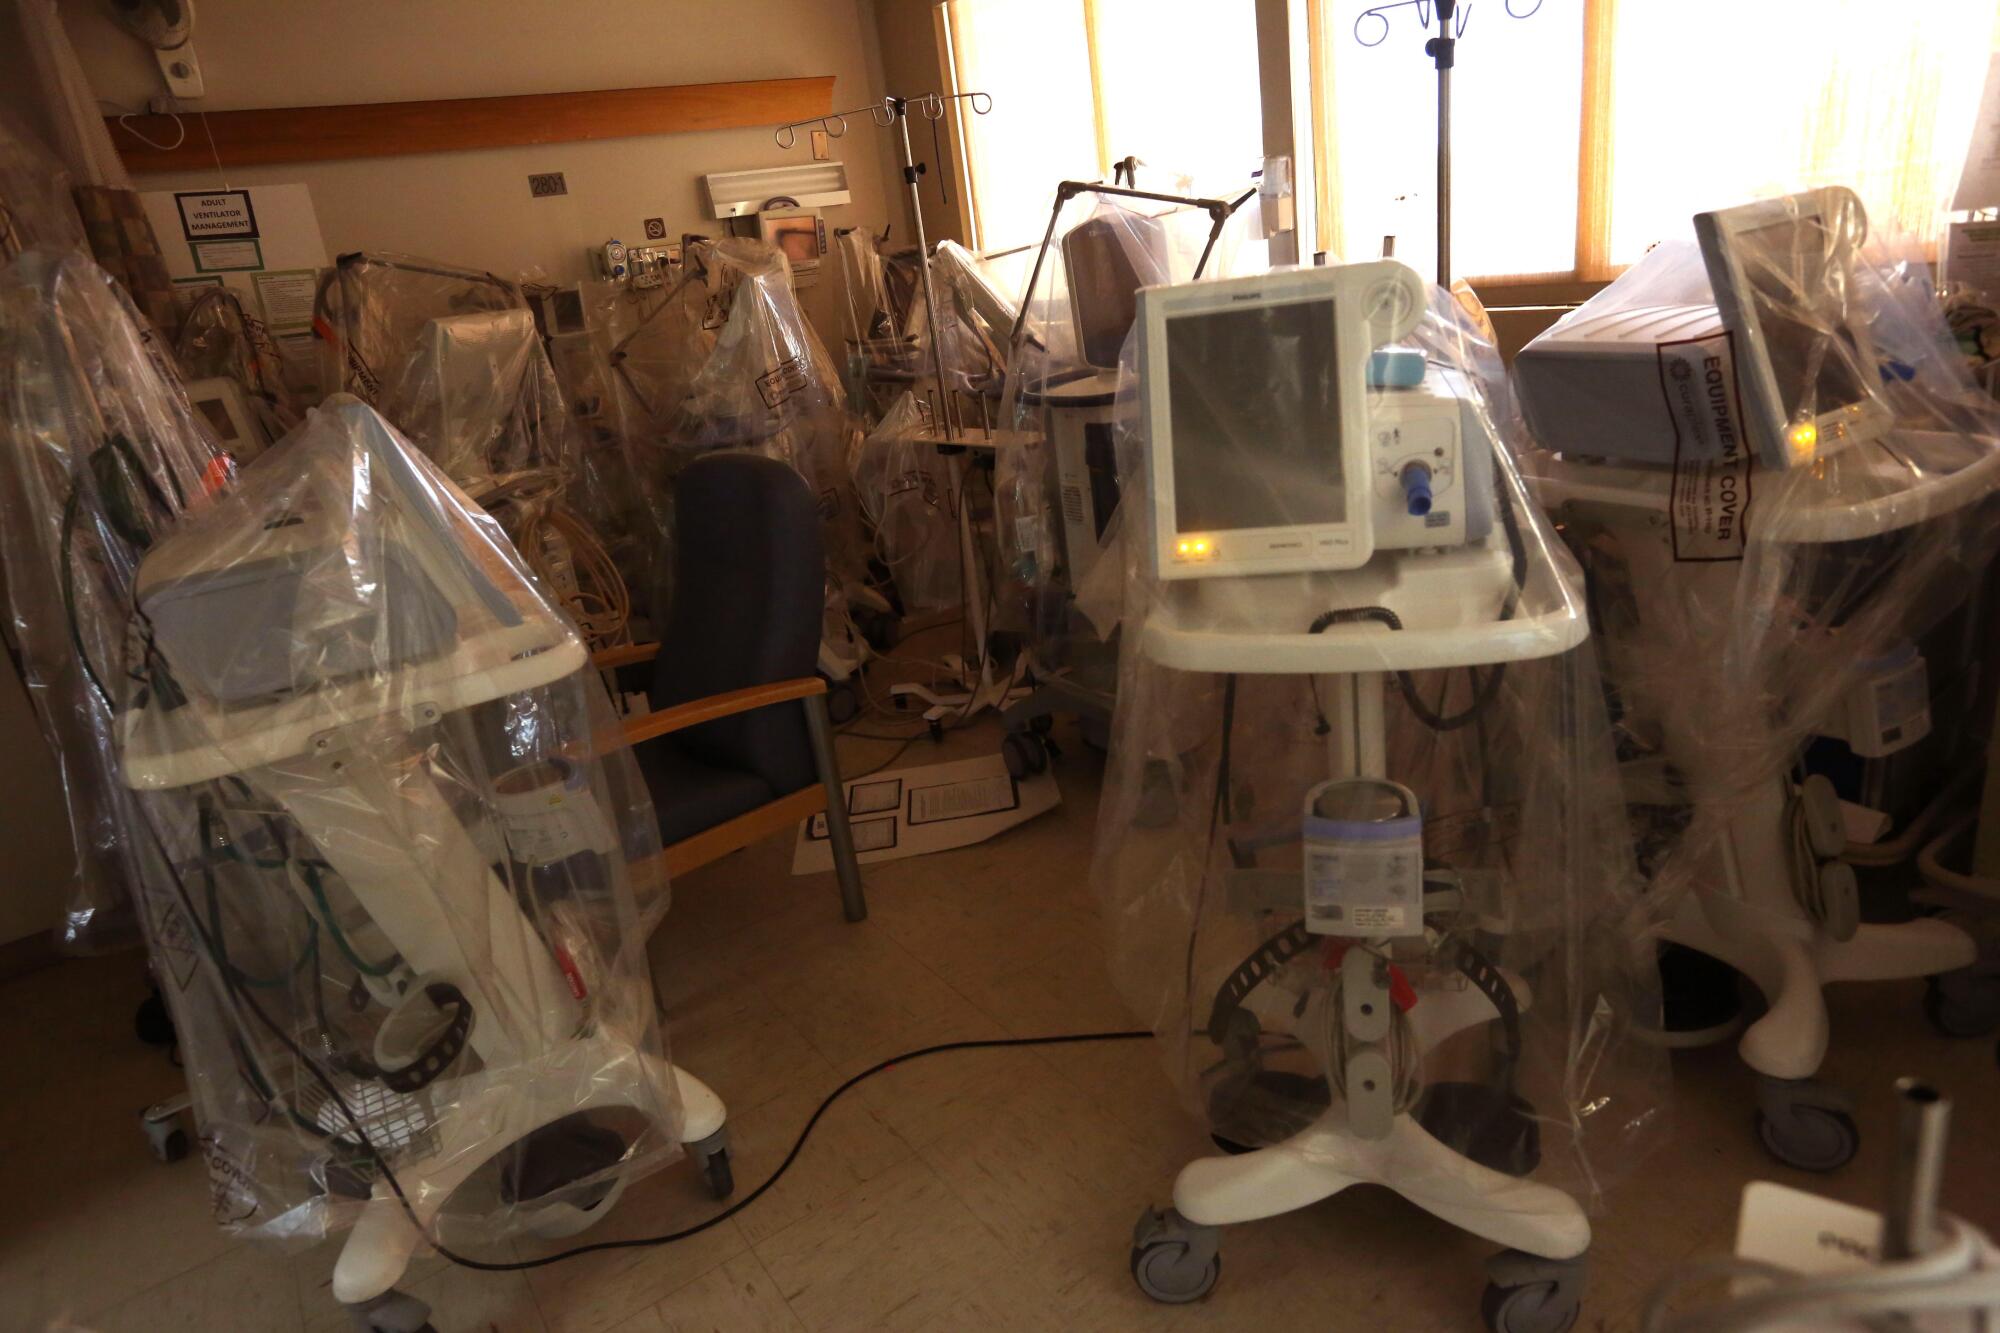 Respirators sit idle inside the shuttered Madera Community Hospital